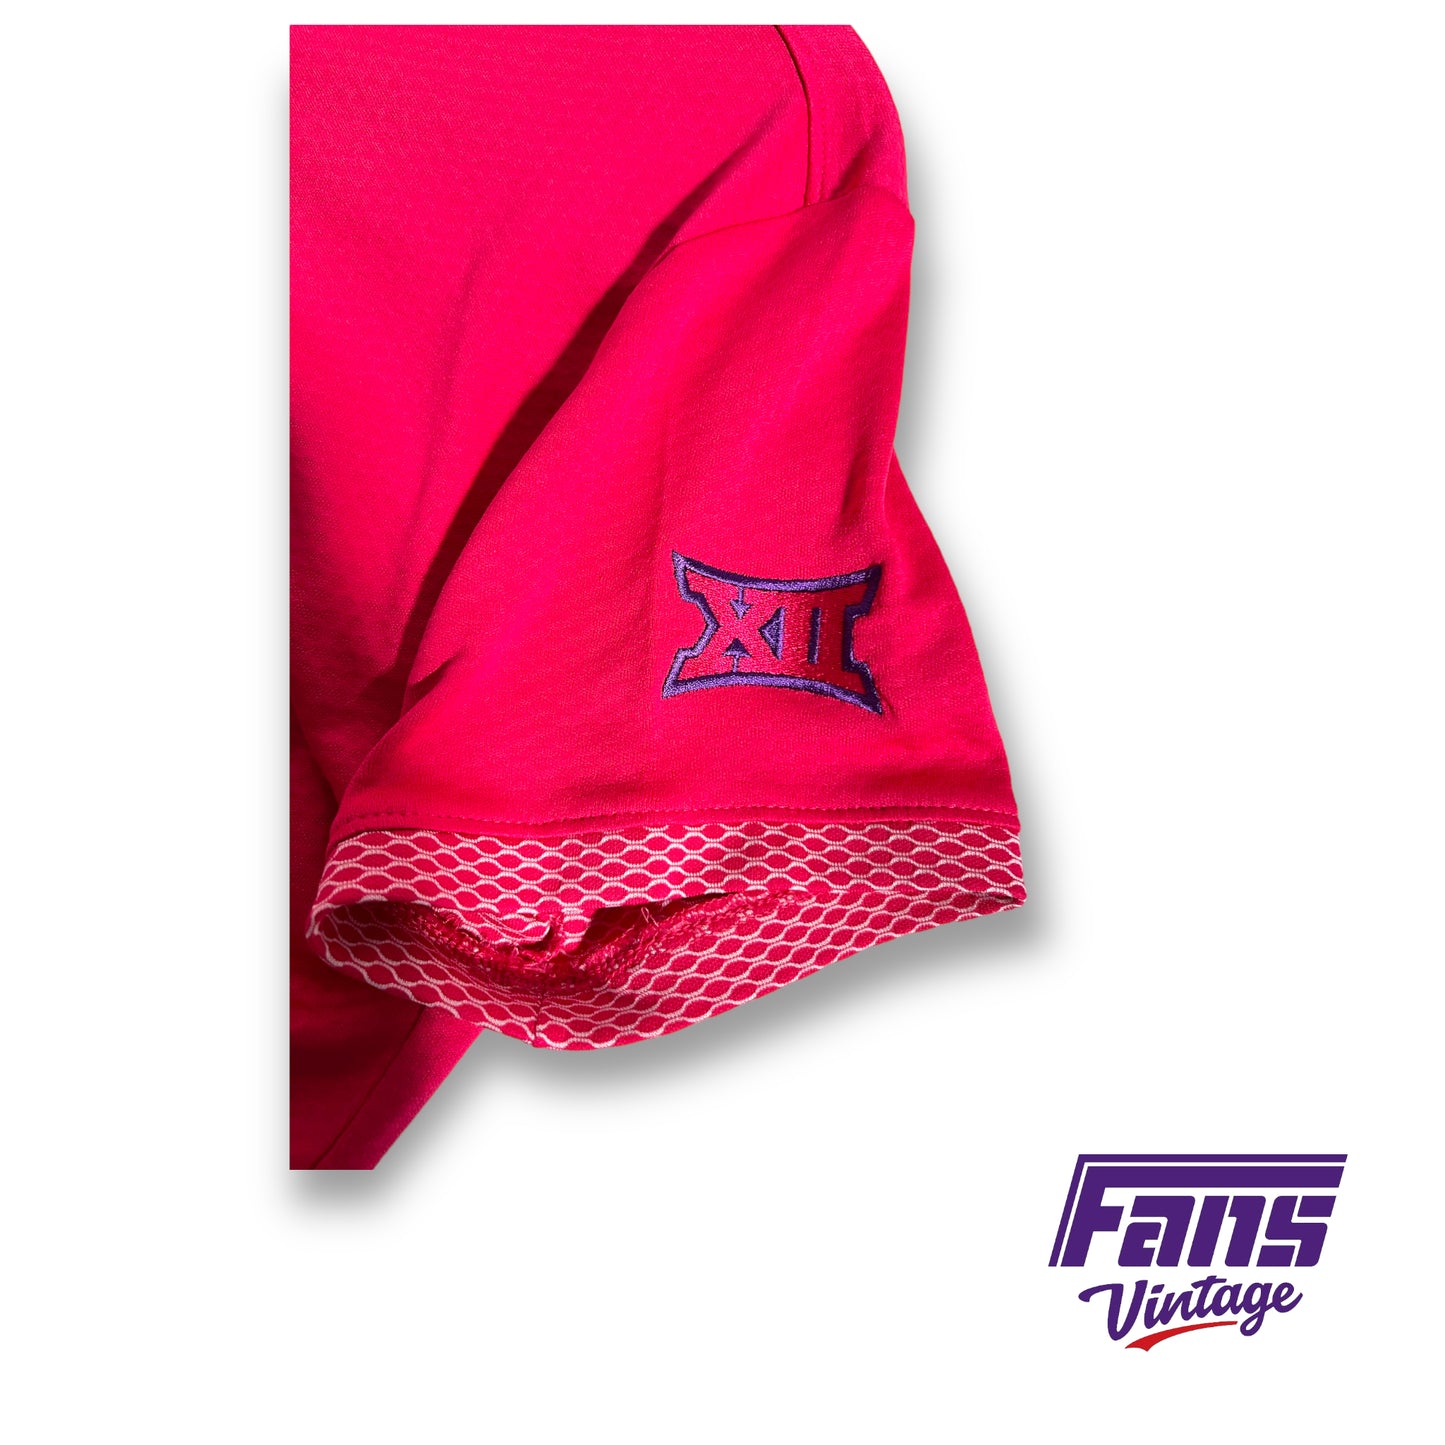 Nike Golf TCU Team Issued Ladies Polo - Rare Color!